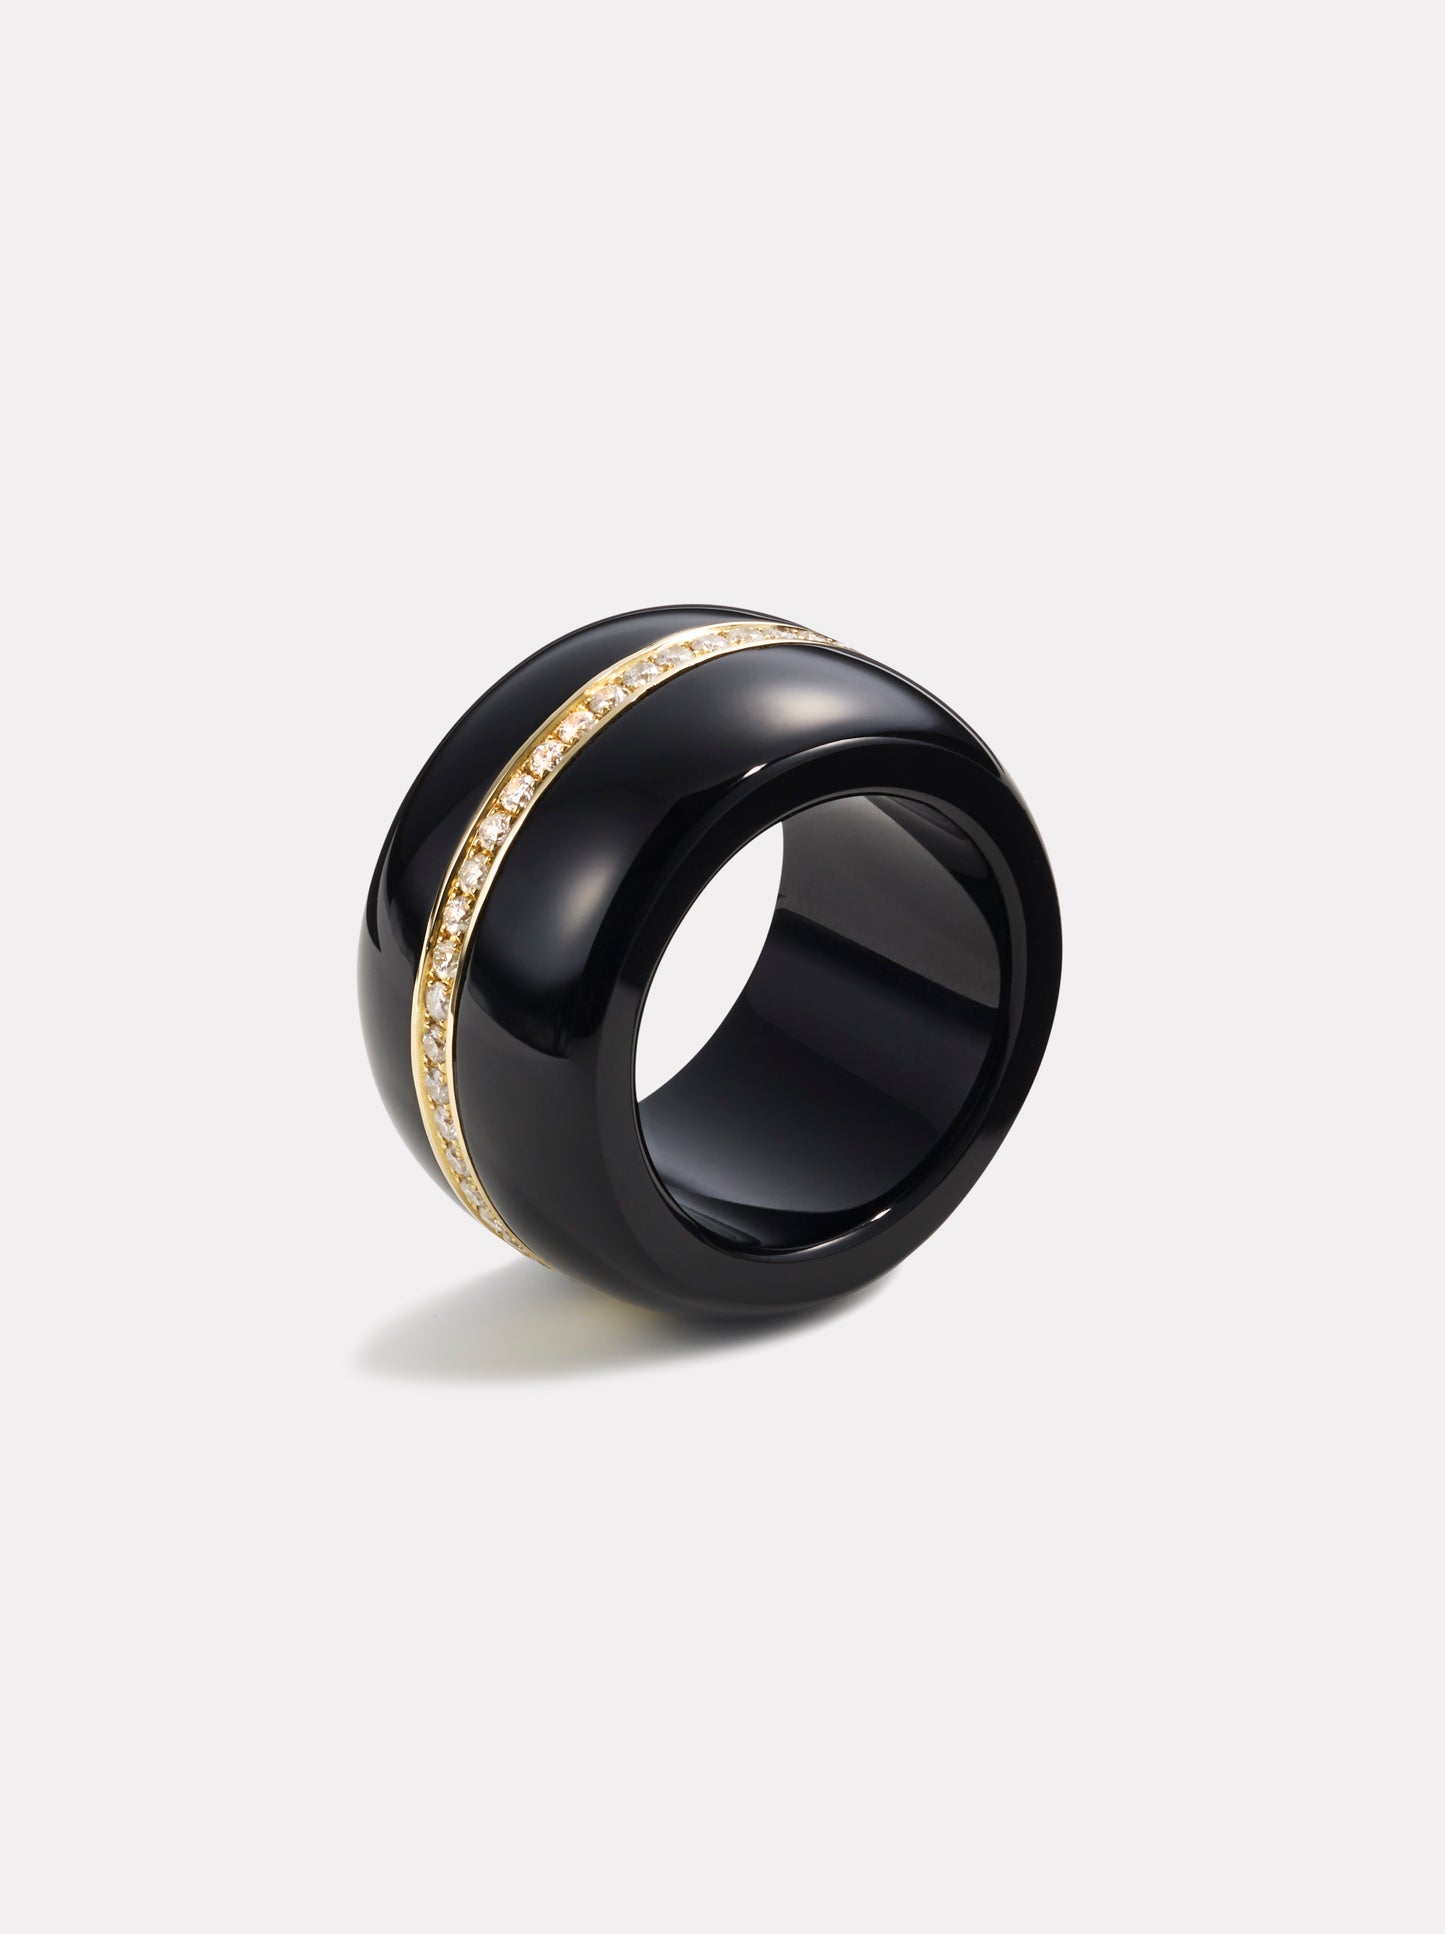 Diamond Pebble Cocktail Ring in Black Onyx